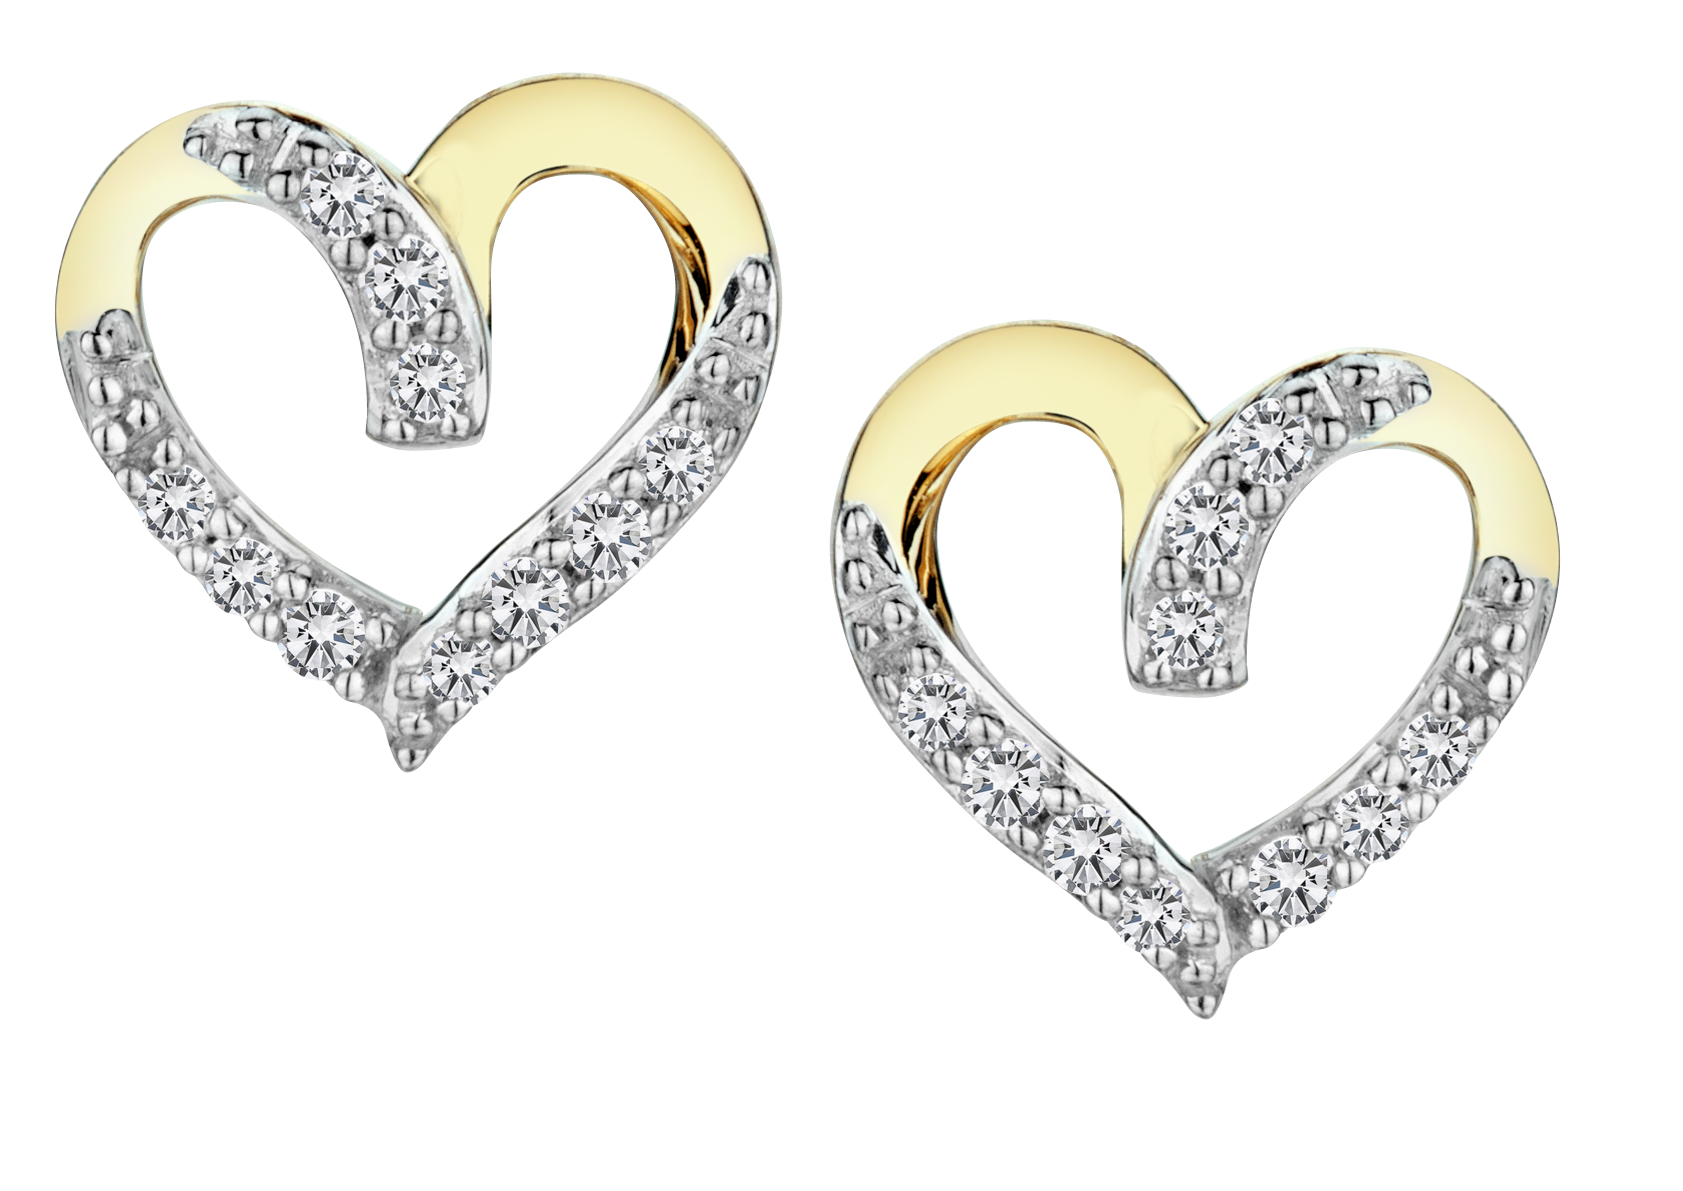 .09 Carat of Diamonds "Heart" Earrings, 10kt Yellow Gold.....................NOW